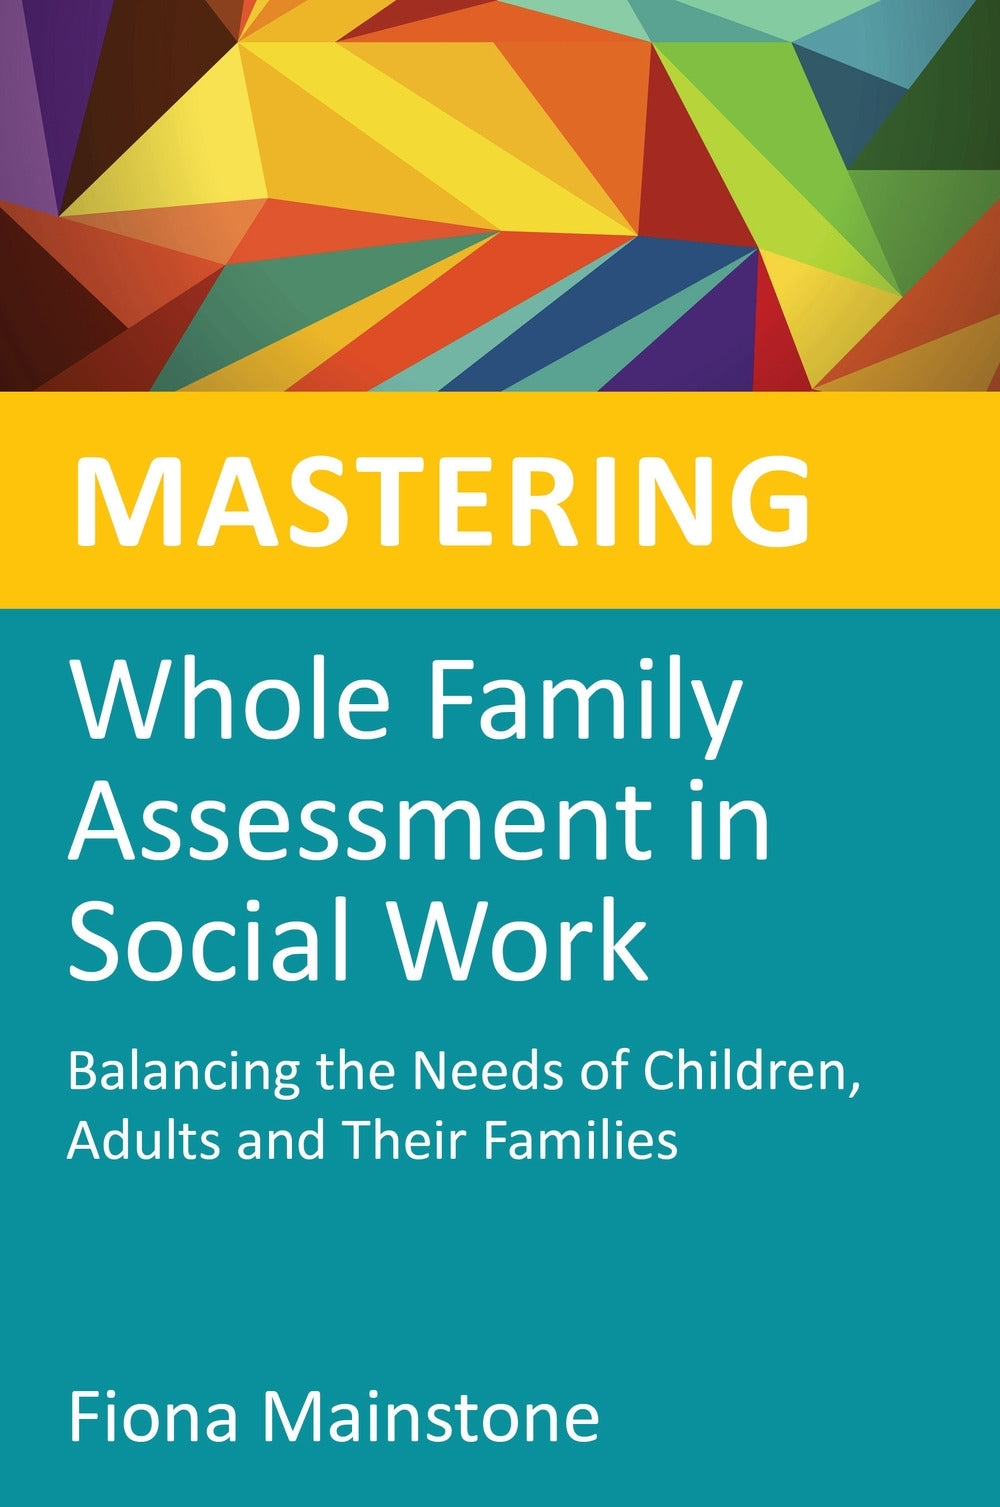 Mastering Whole Family Assessment in Social Work by Fiona Mainstone, Jane Wonnacott